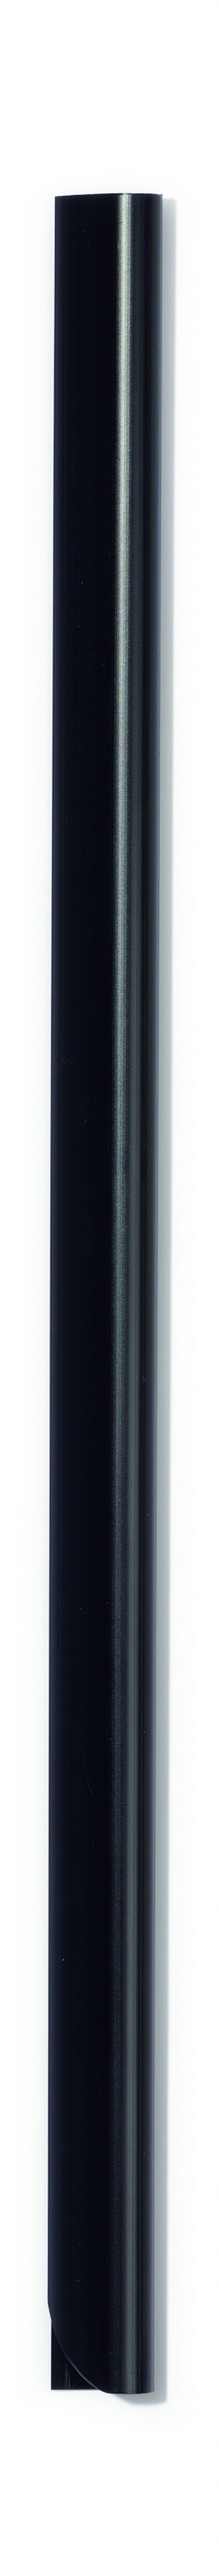 Durable Spine Bar A4 6mm Black (Pack 100) 290101